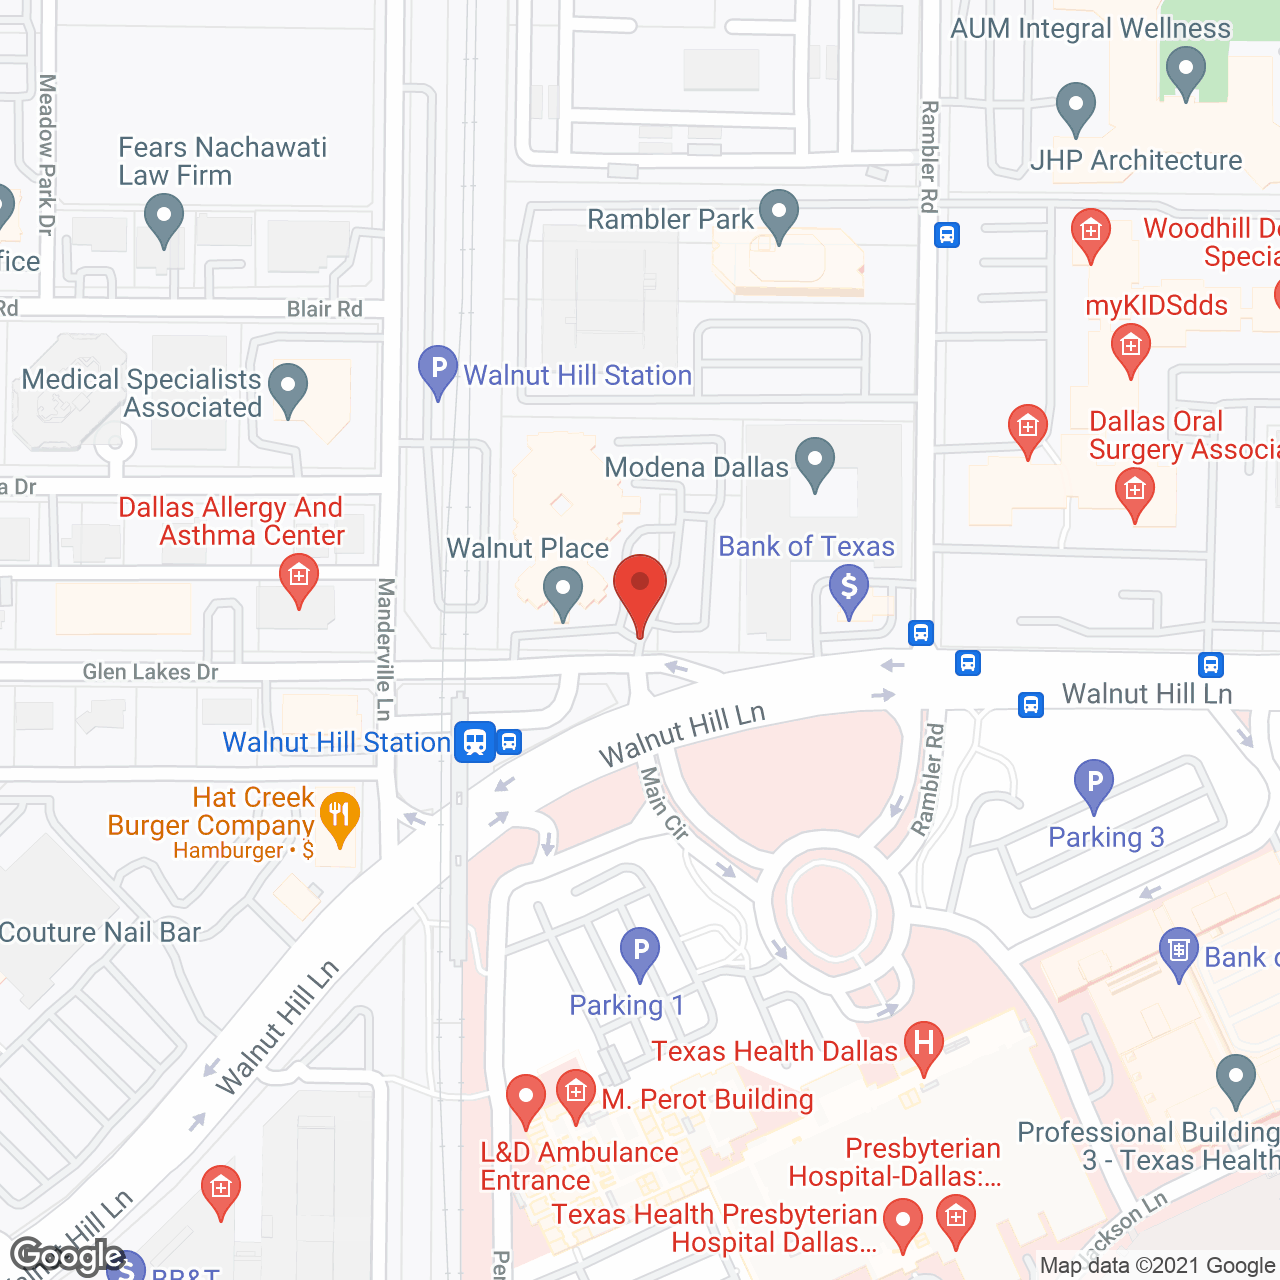 Walnut Place - AL/MC in google map